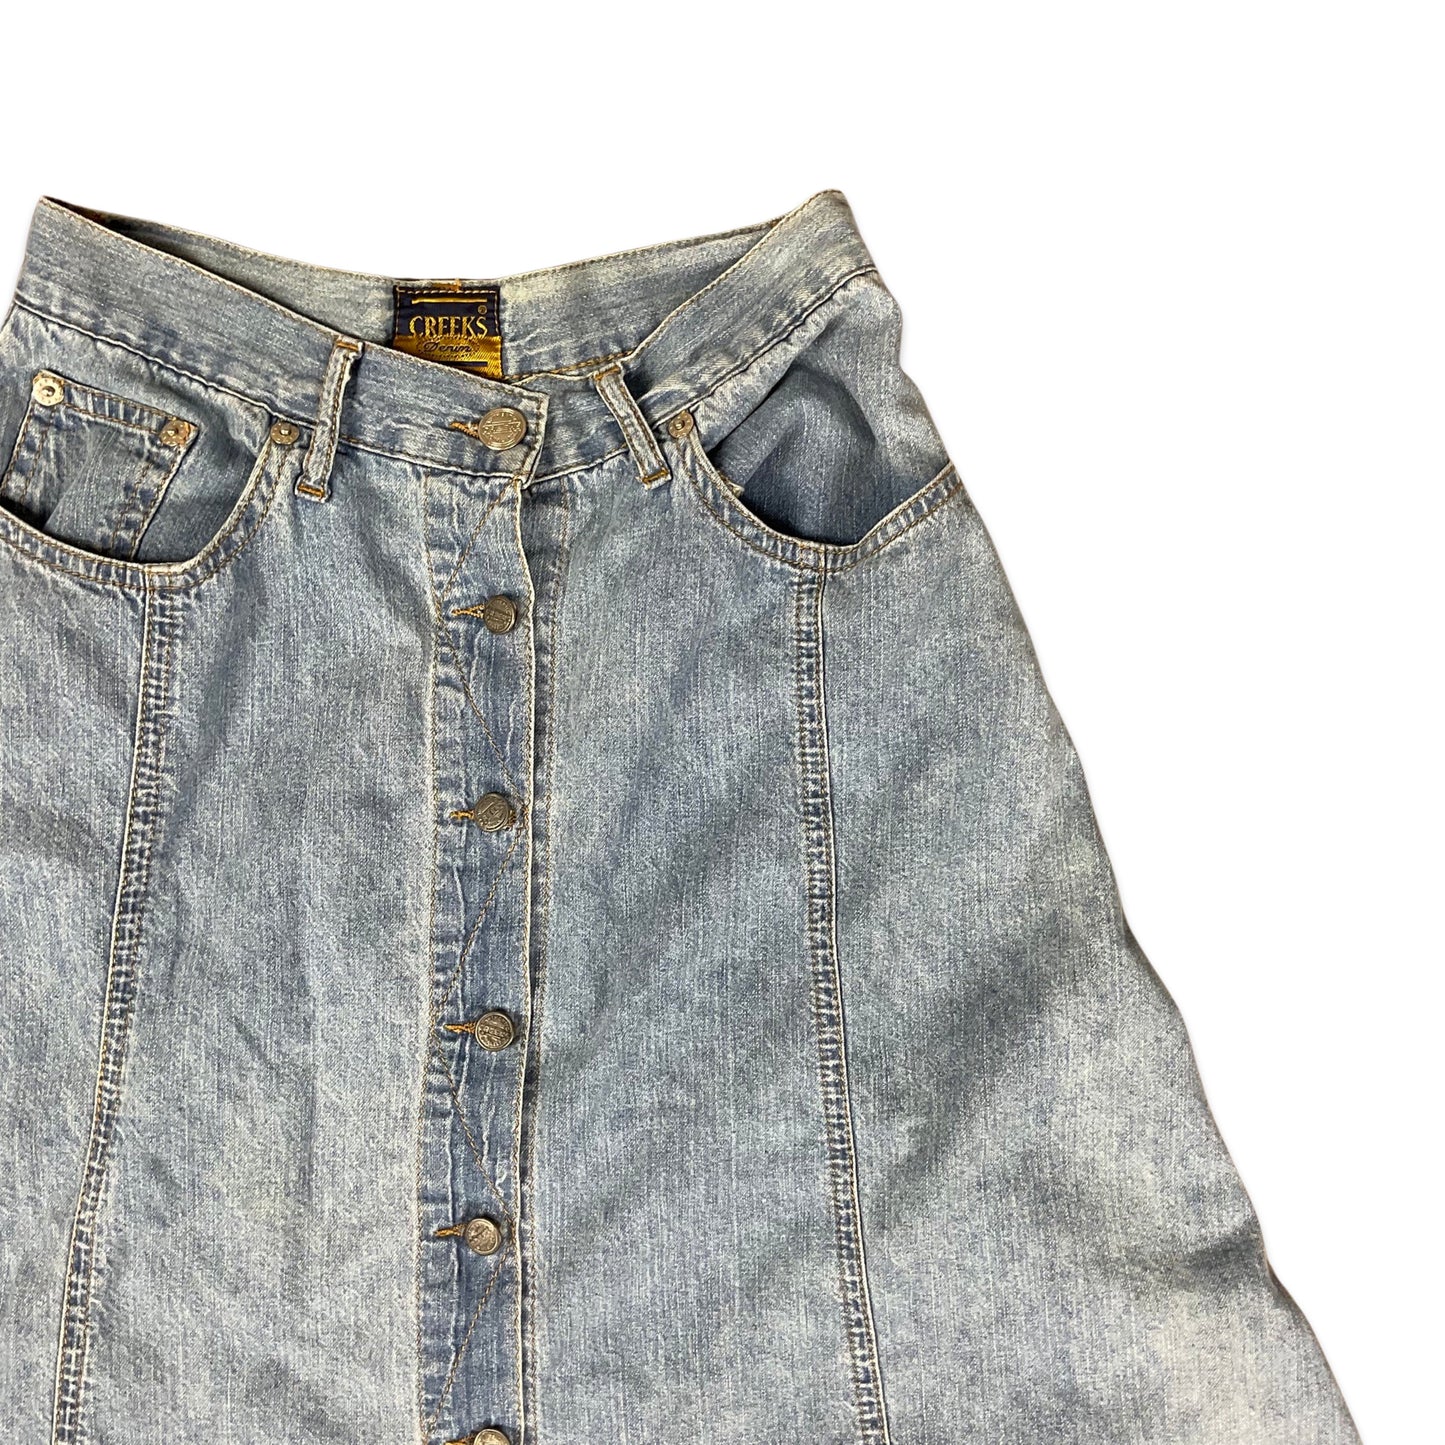 Vintage Blue Denim Button-up Midi Skirt 8